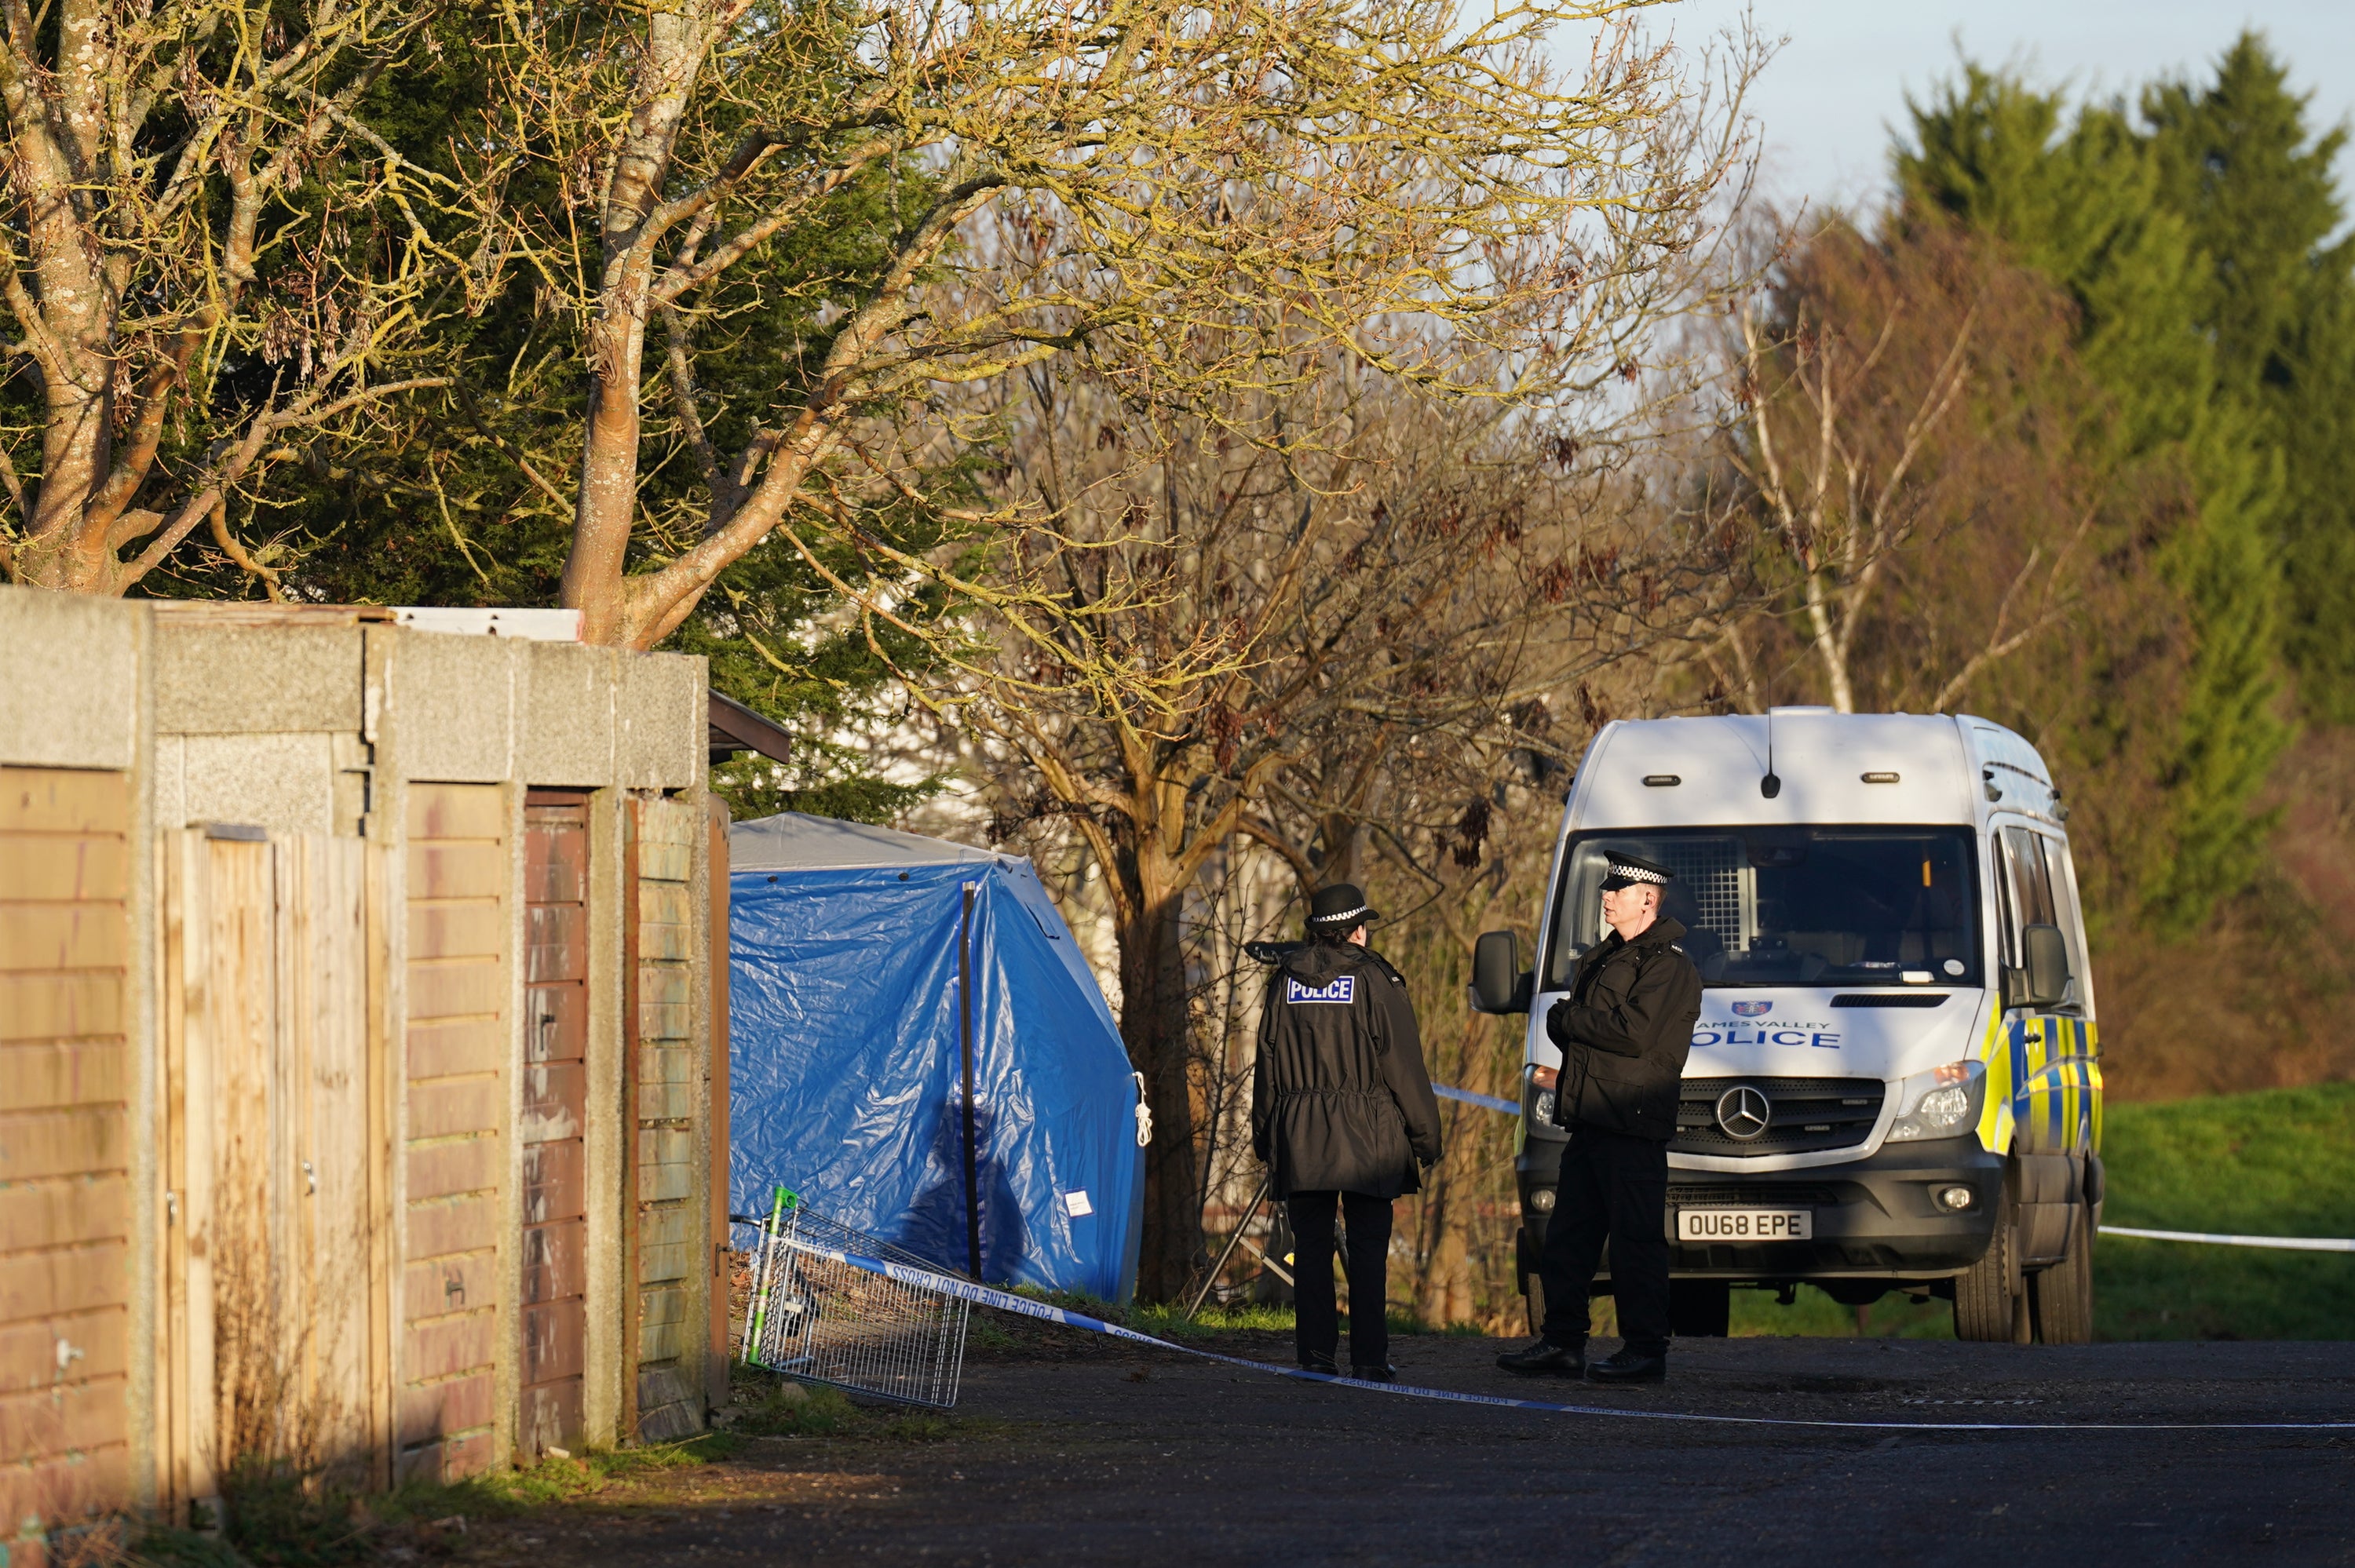 Police at the scene on Broadlands, Netherfield, Milton Keynes